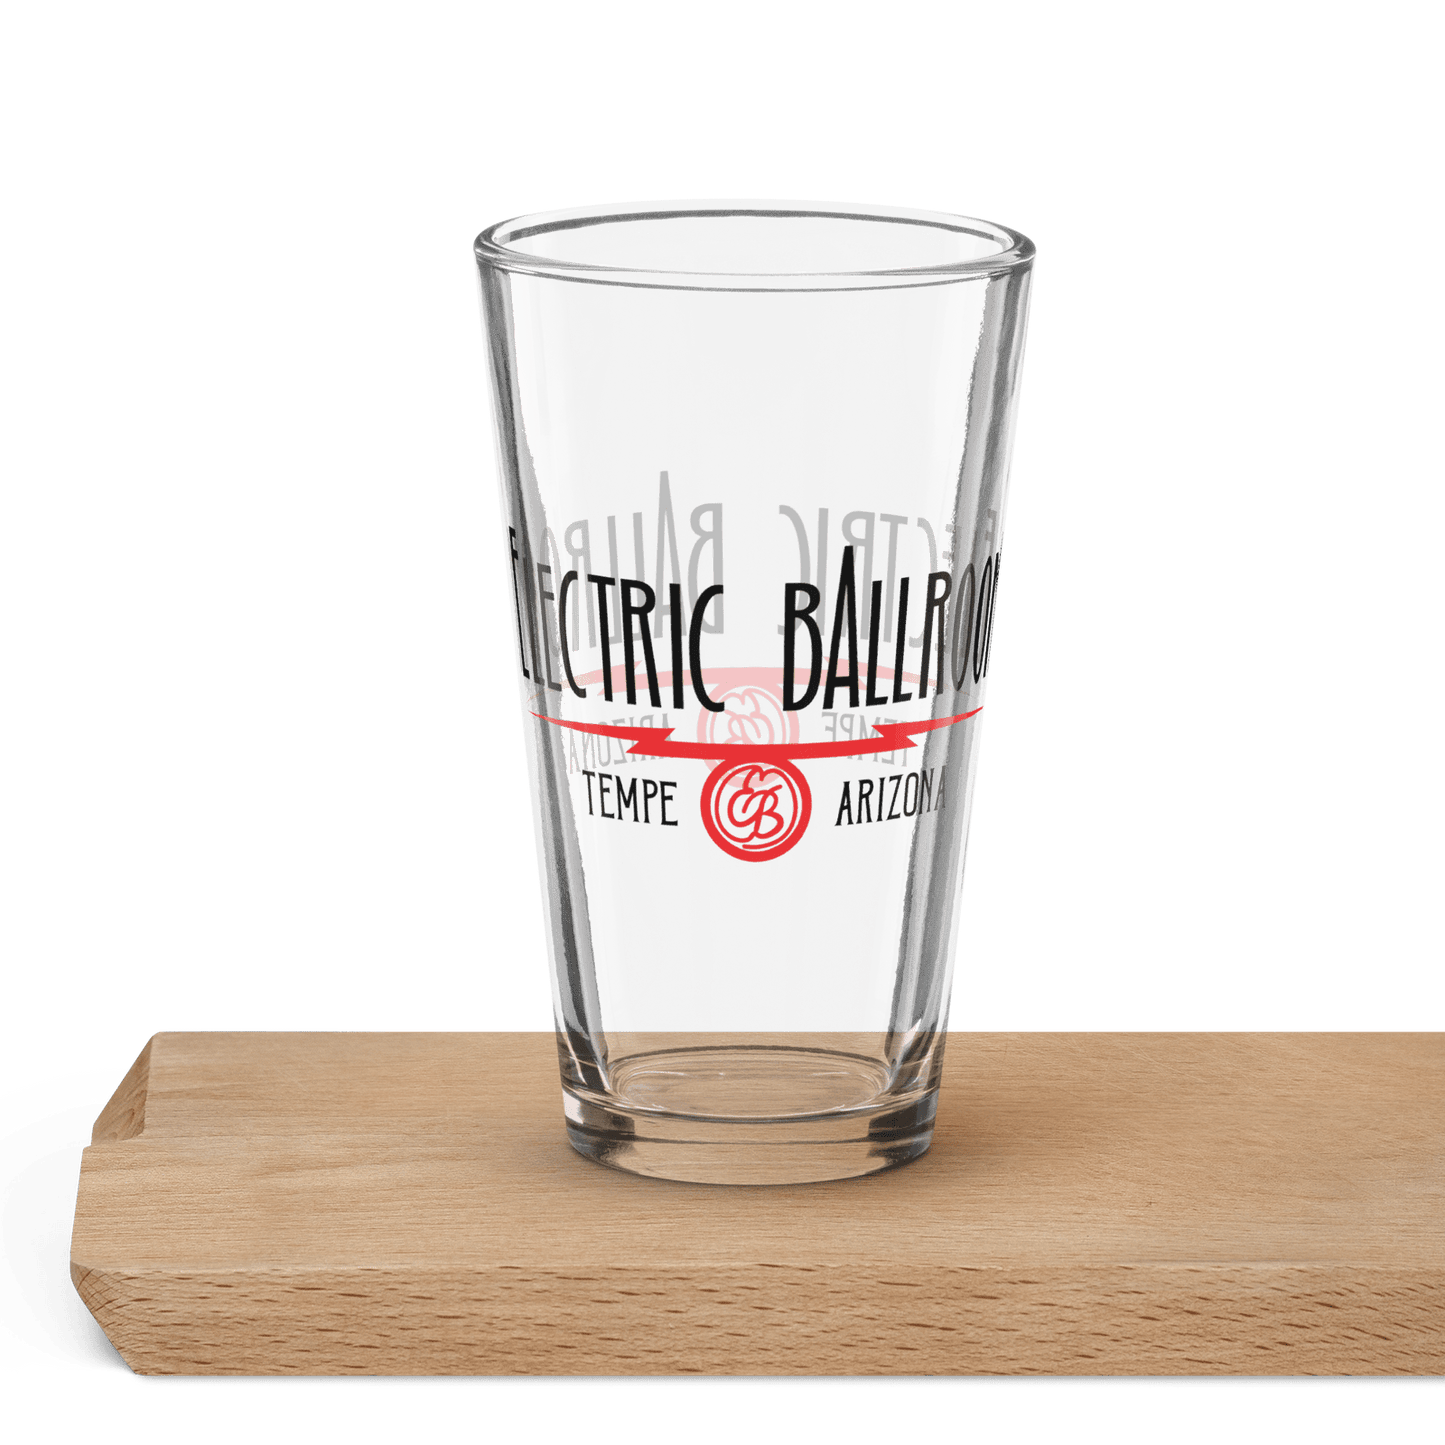 Electric Ballroom Shaker Pint Glass